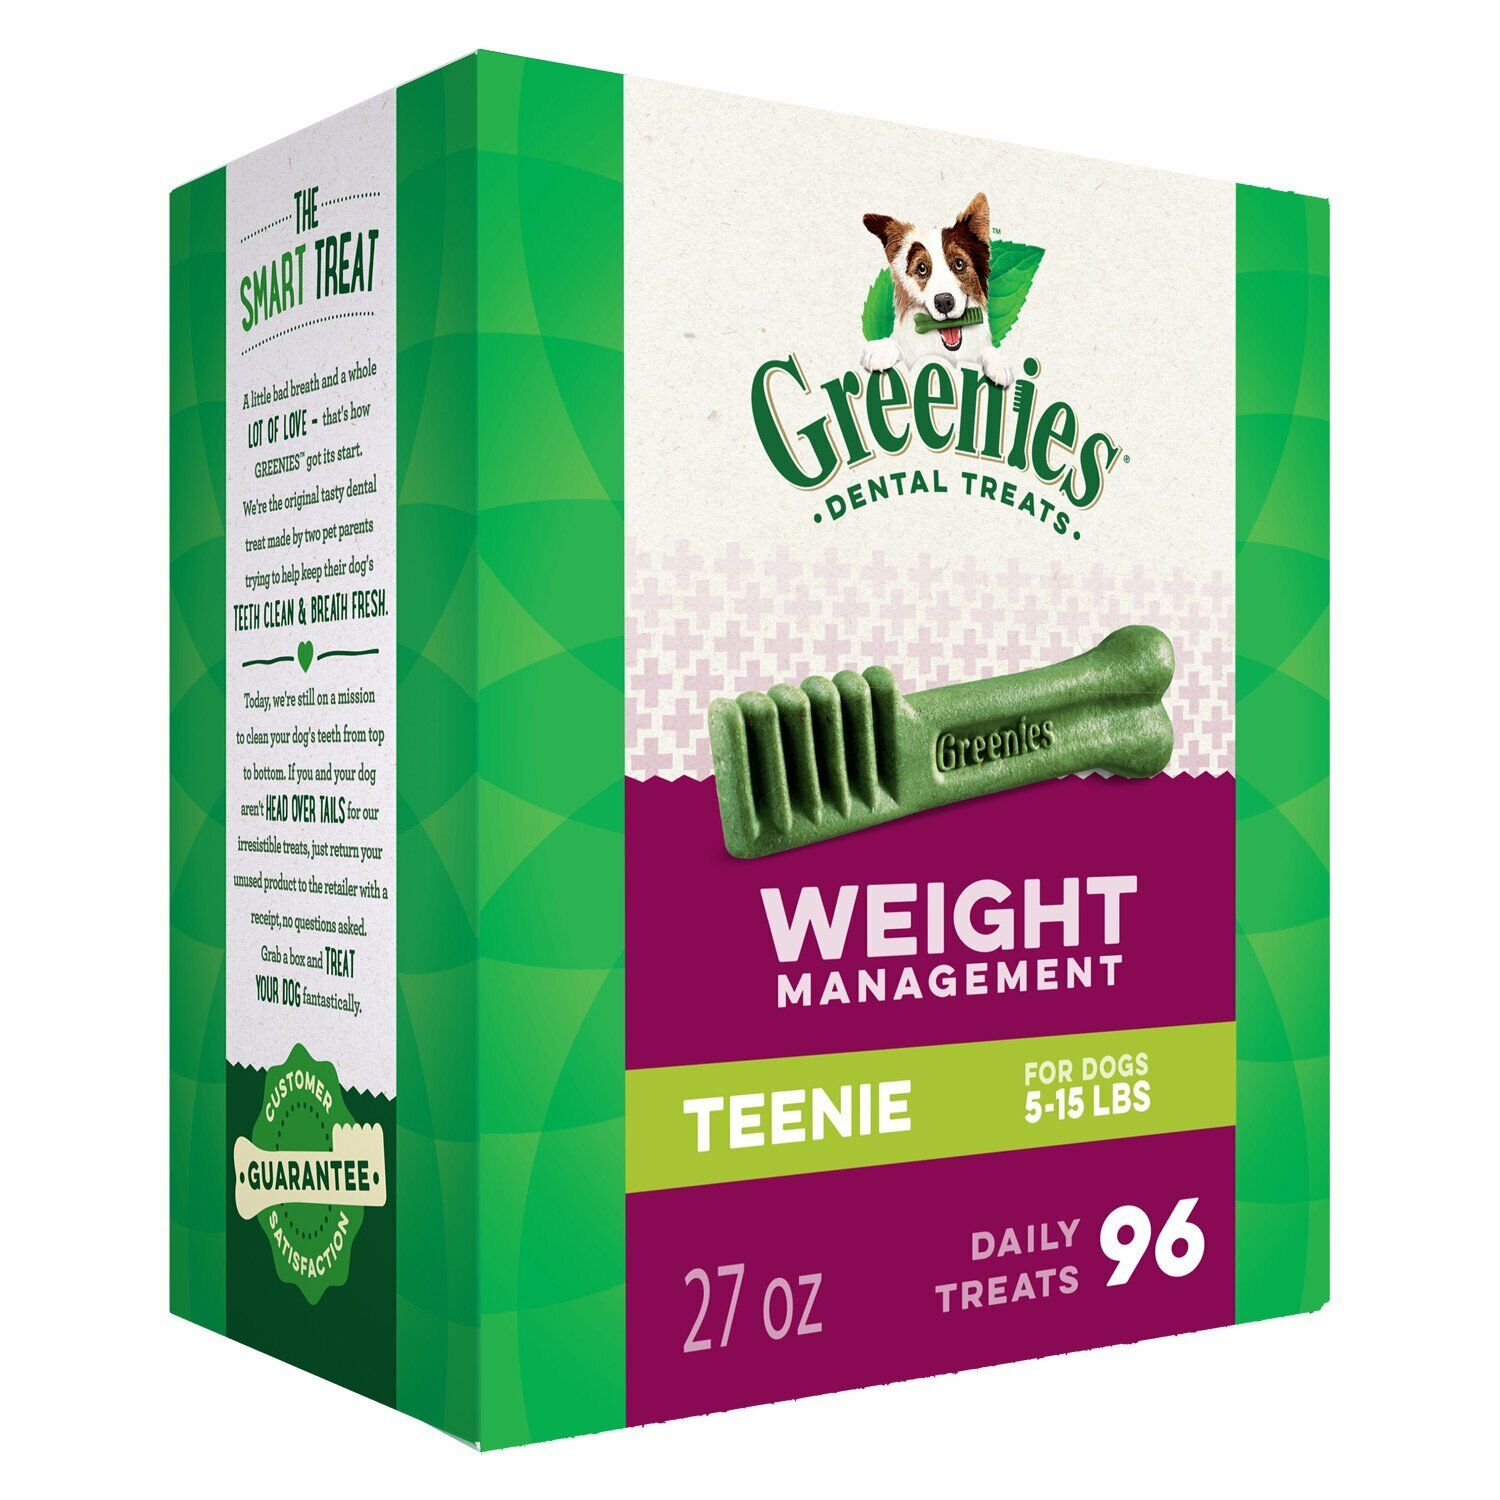 Greenies Dog Dental Treats Teenie Weight Management, 96 Count (EXP 08/2020)